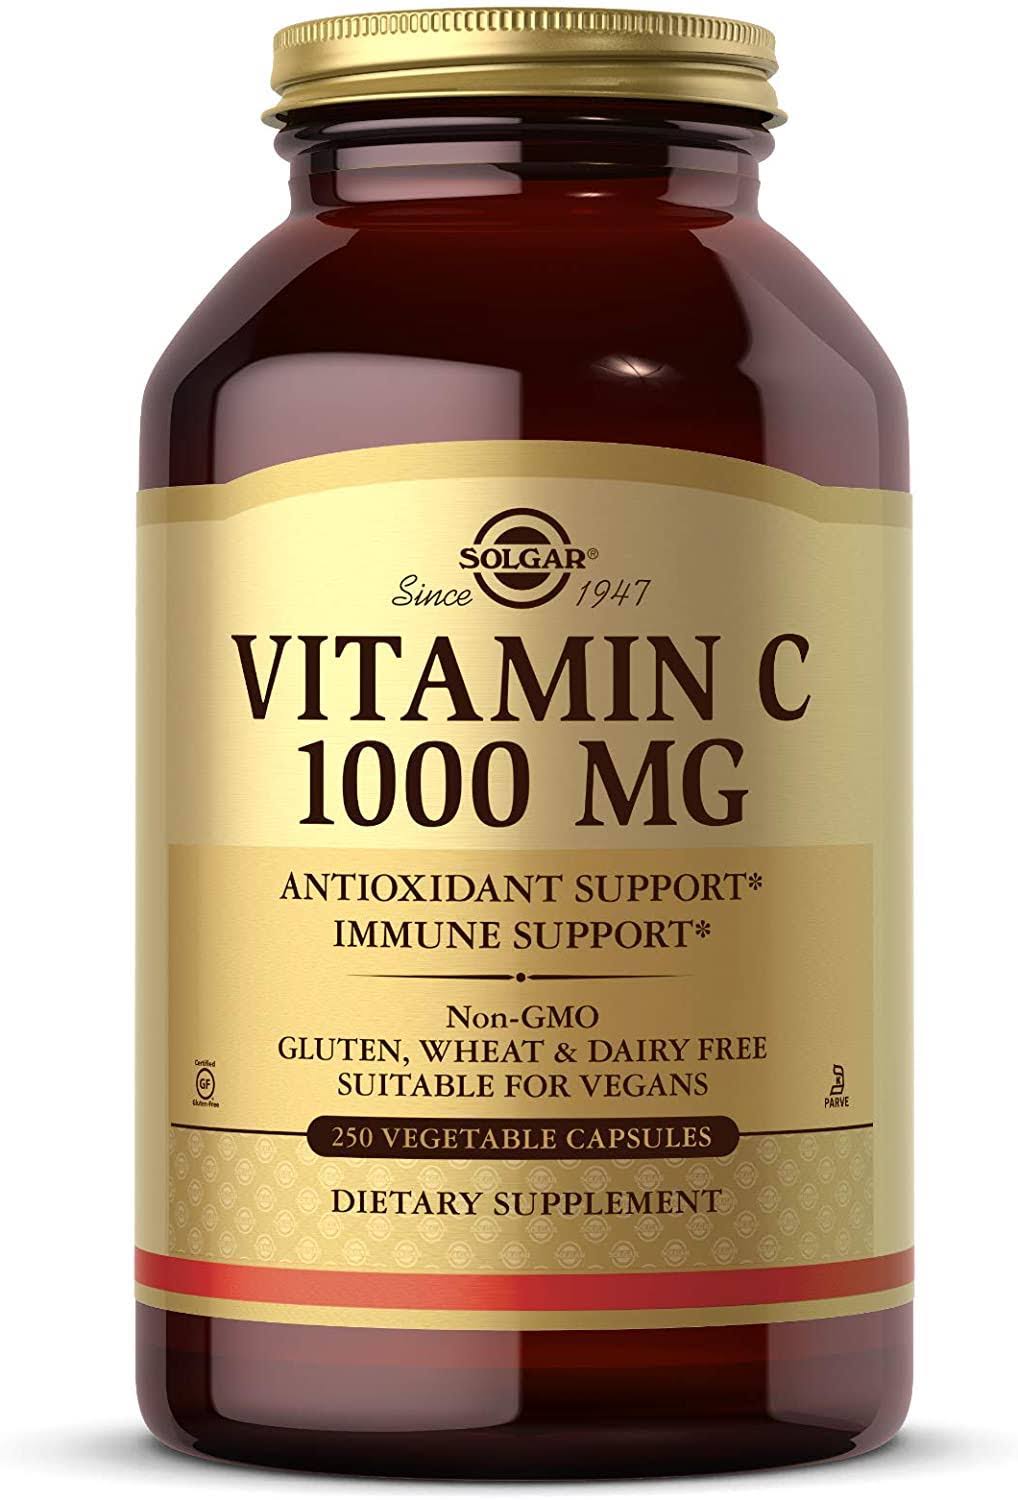 Solgar Vitamin C Dietary Supplement - 100mg, 250 Vegetable Capsules